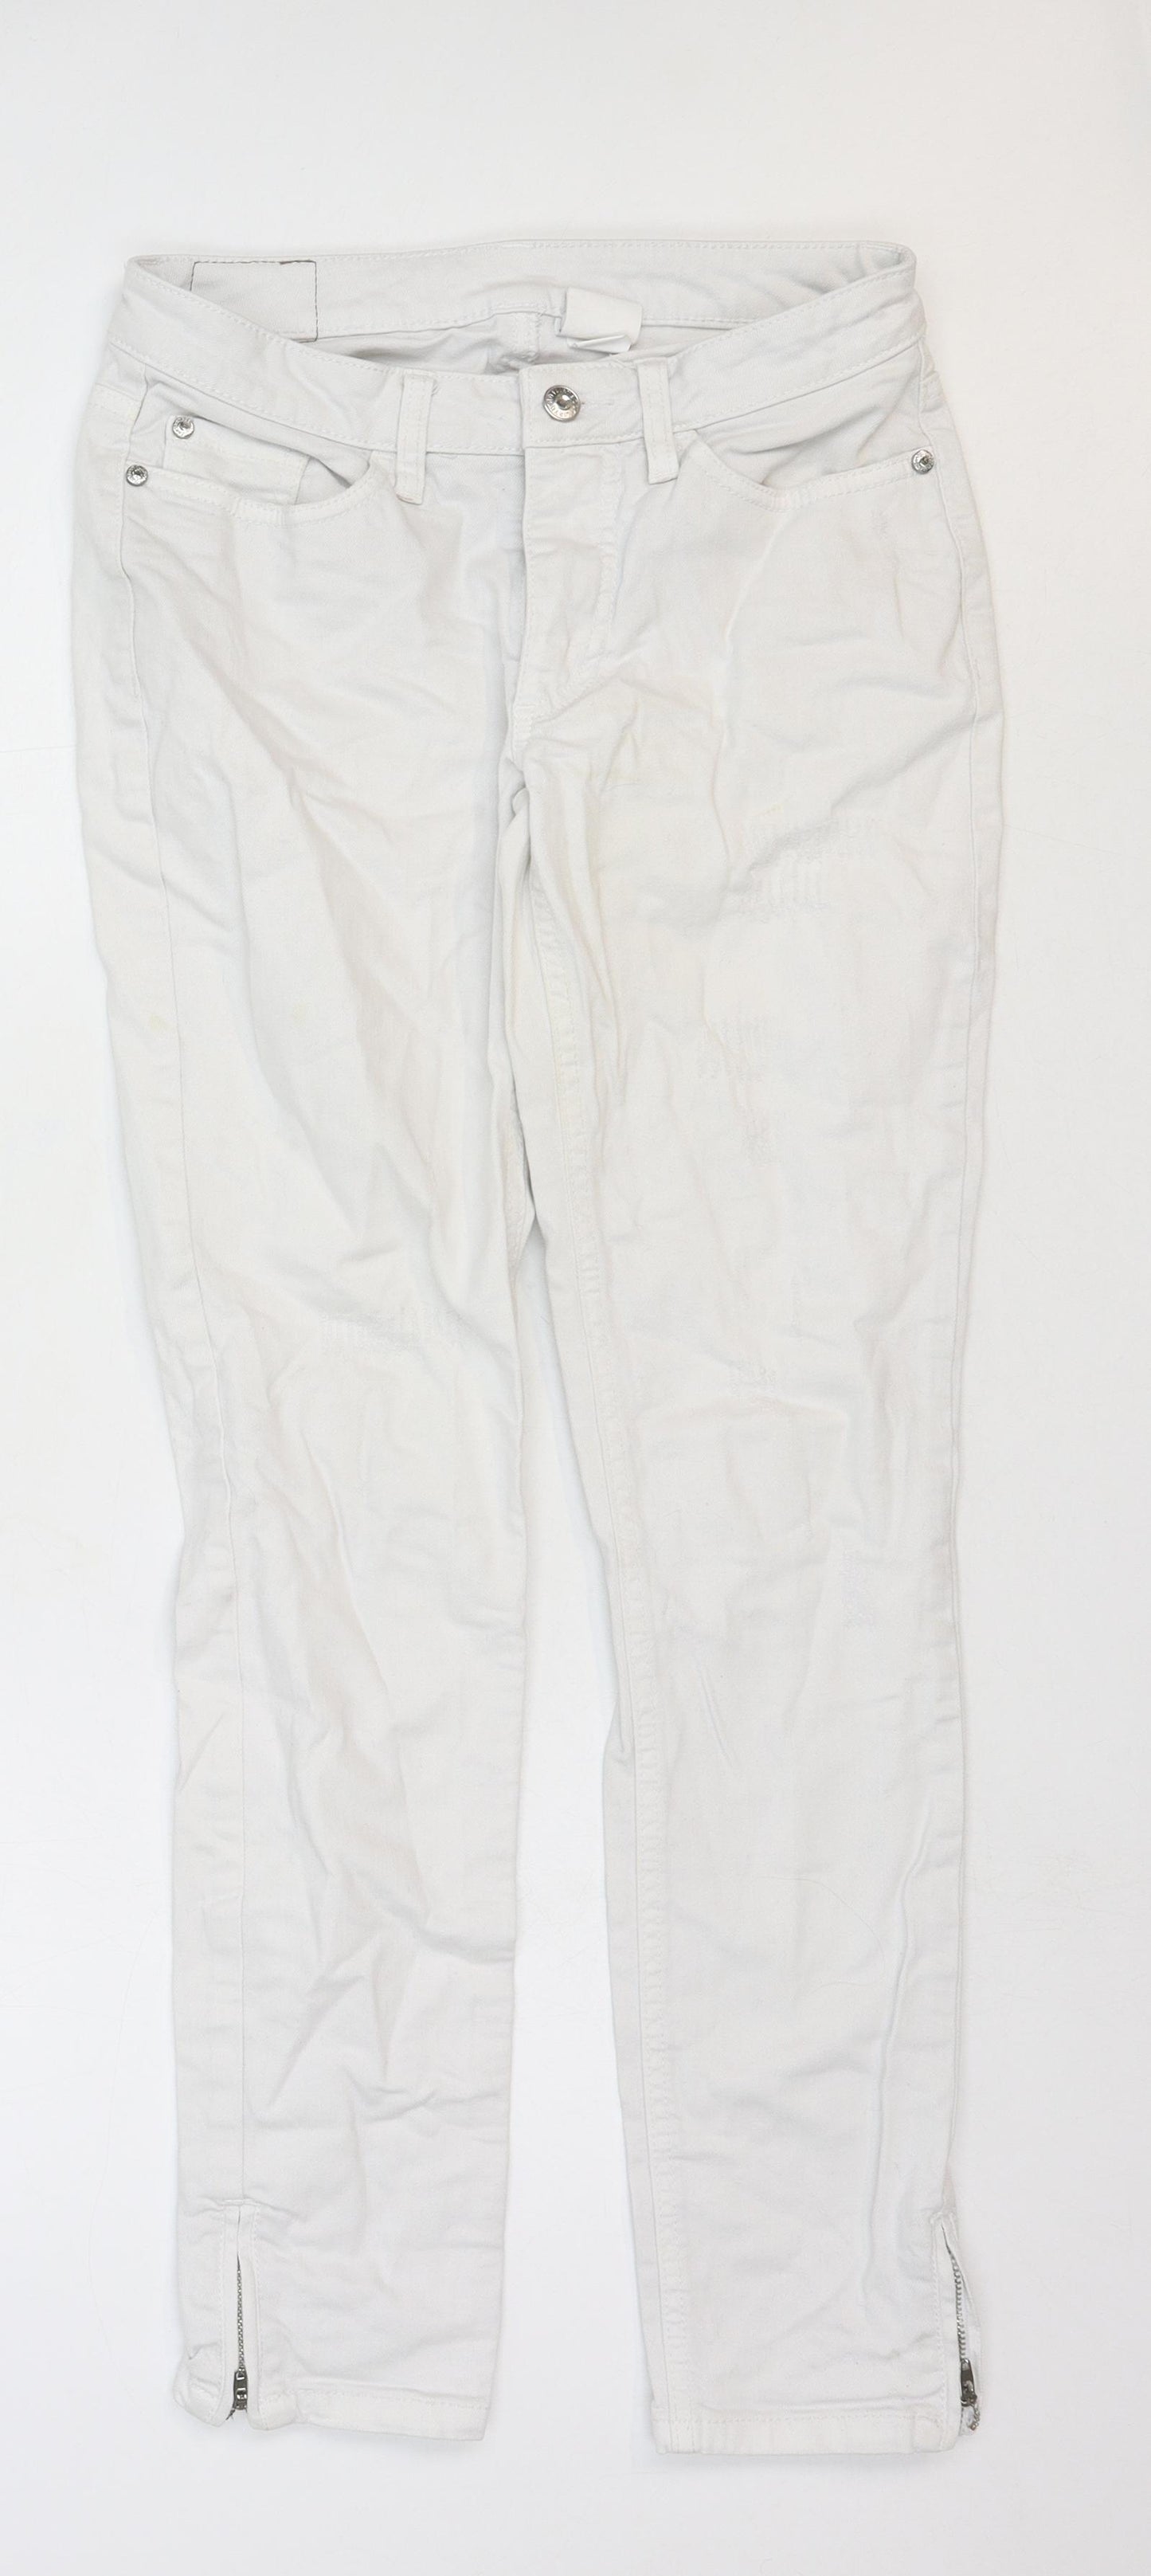 Body Flirt Womens White Cotton Straight Jeans Size 8 Regular Zip